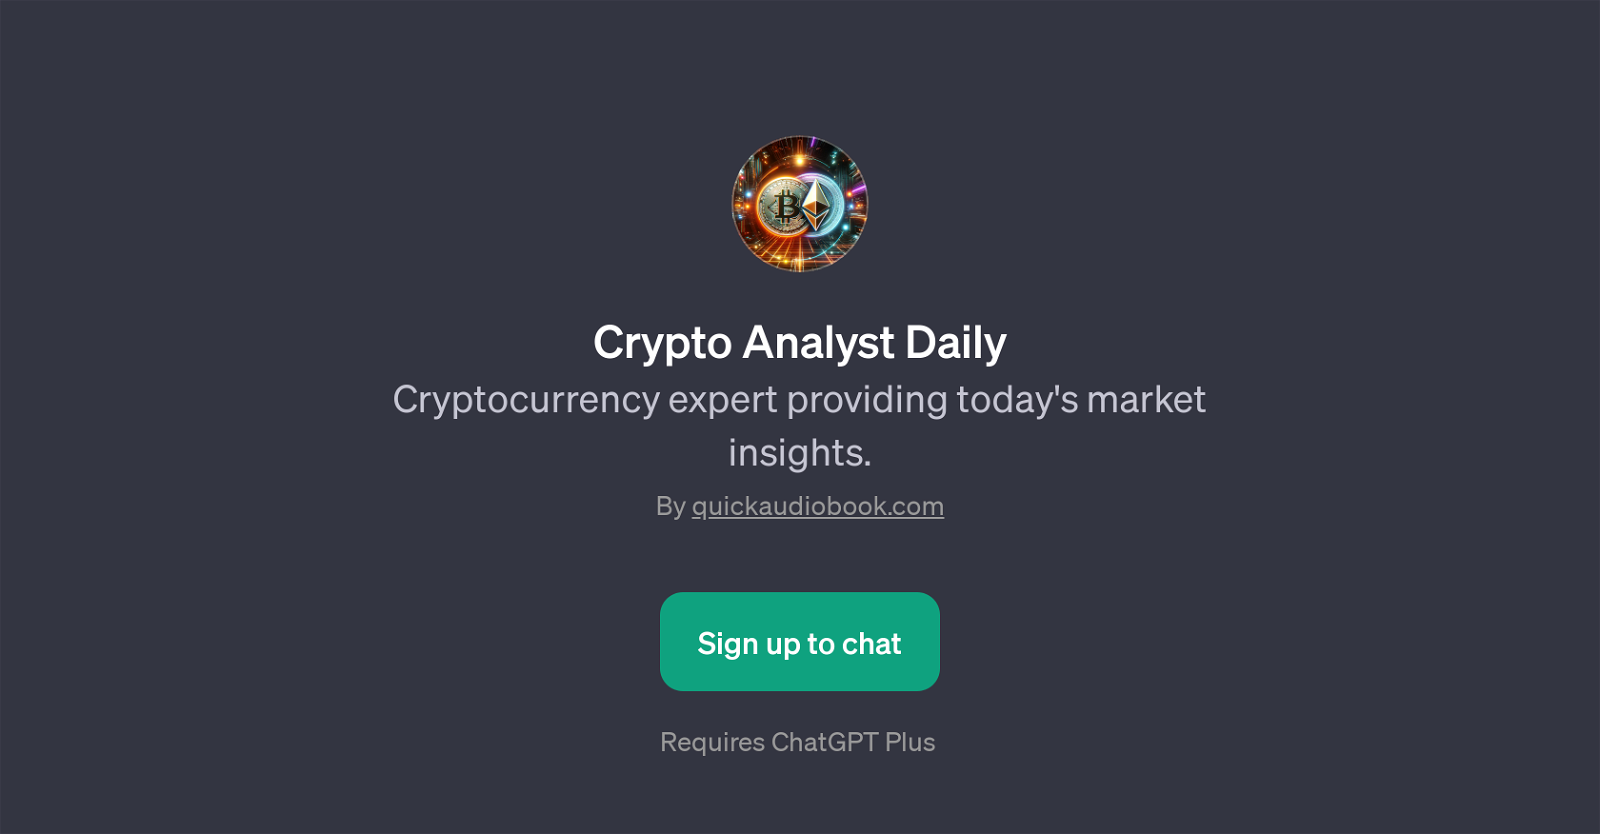 Crypto Analyst Daily website